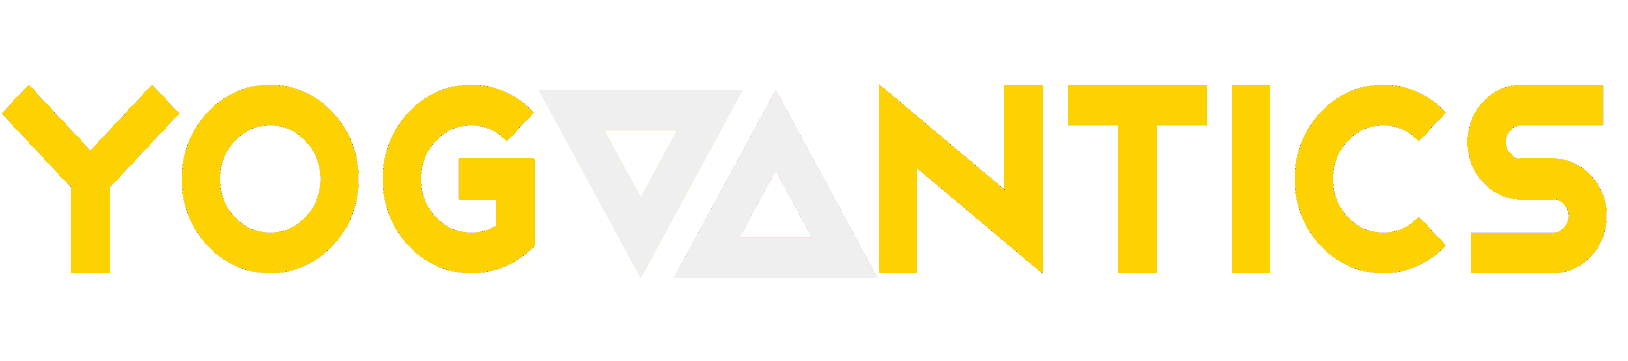 Logo - text reading 'Yoga Antics'